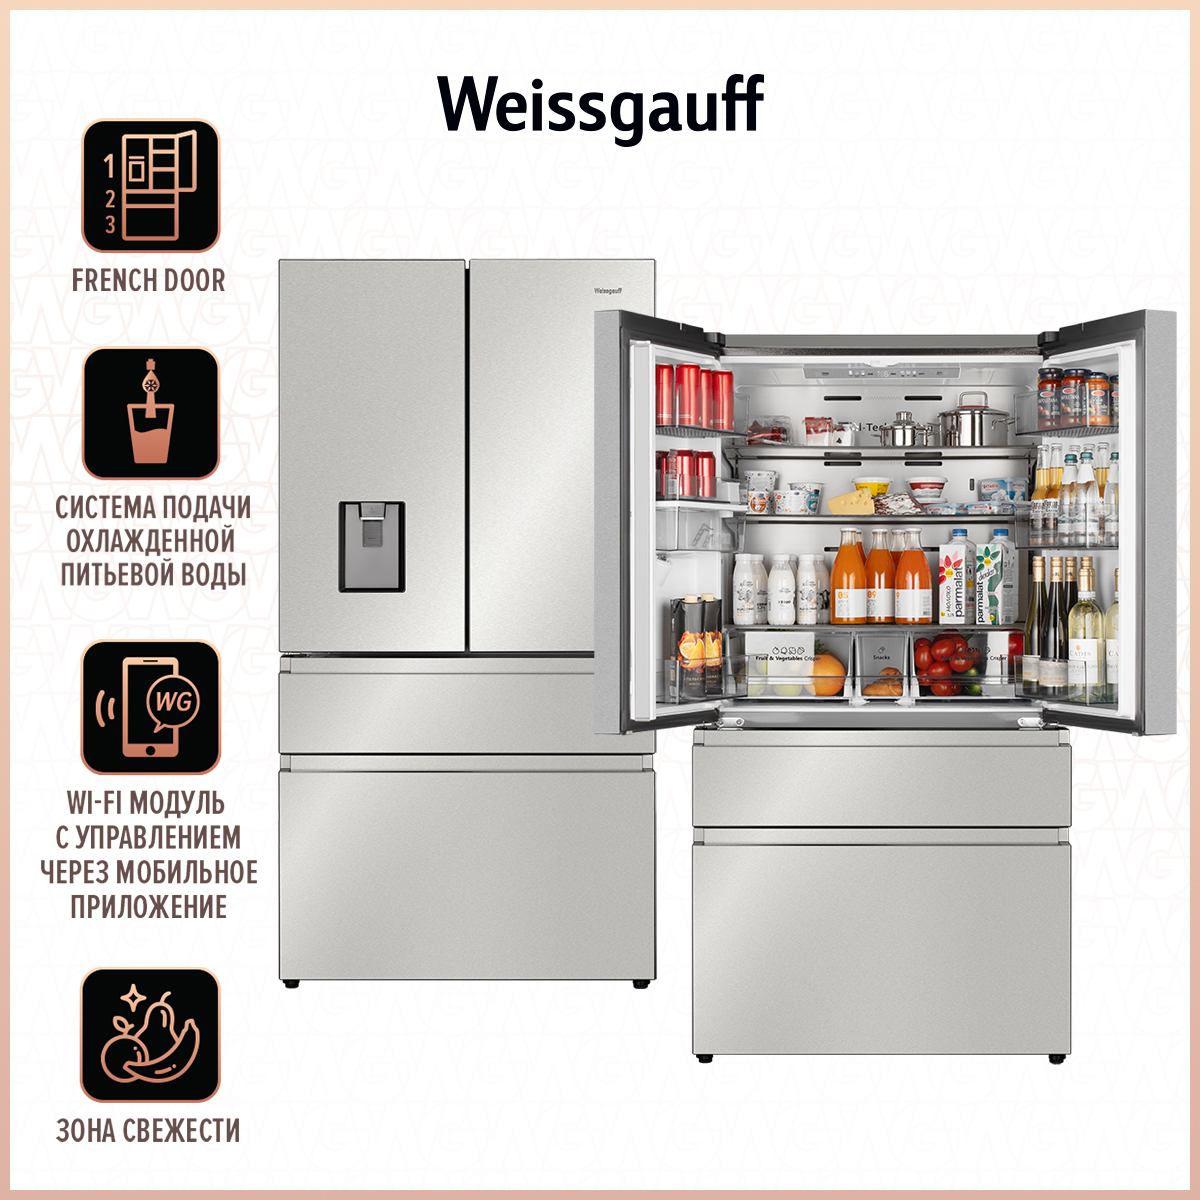 Холодильник Weissgauff WFD 585 черный двухкамерный холодильник weissgauff wrk 190 x full nofrost